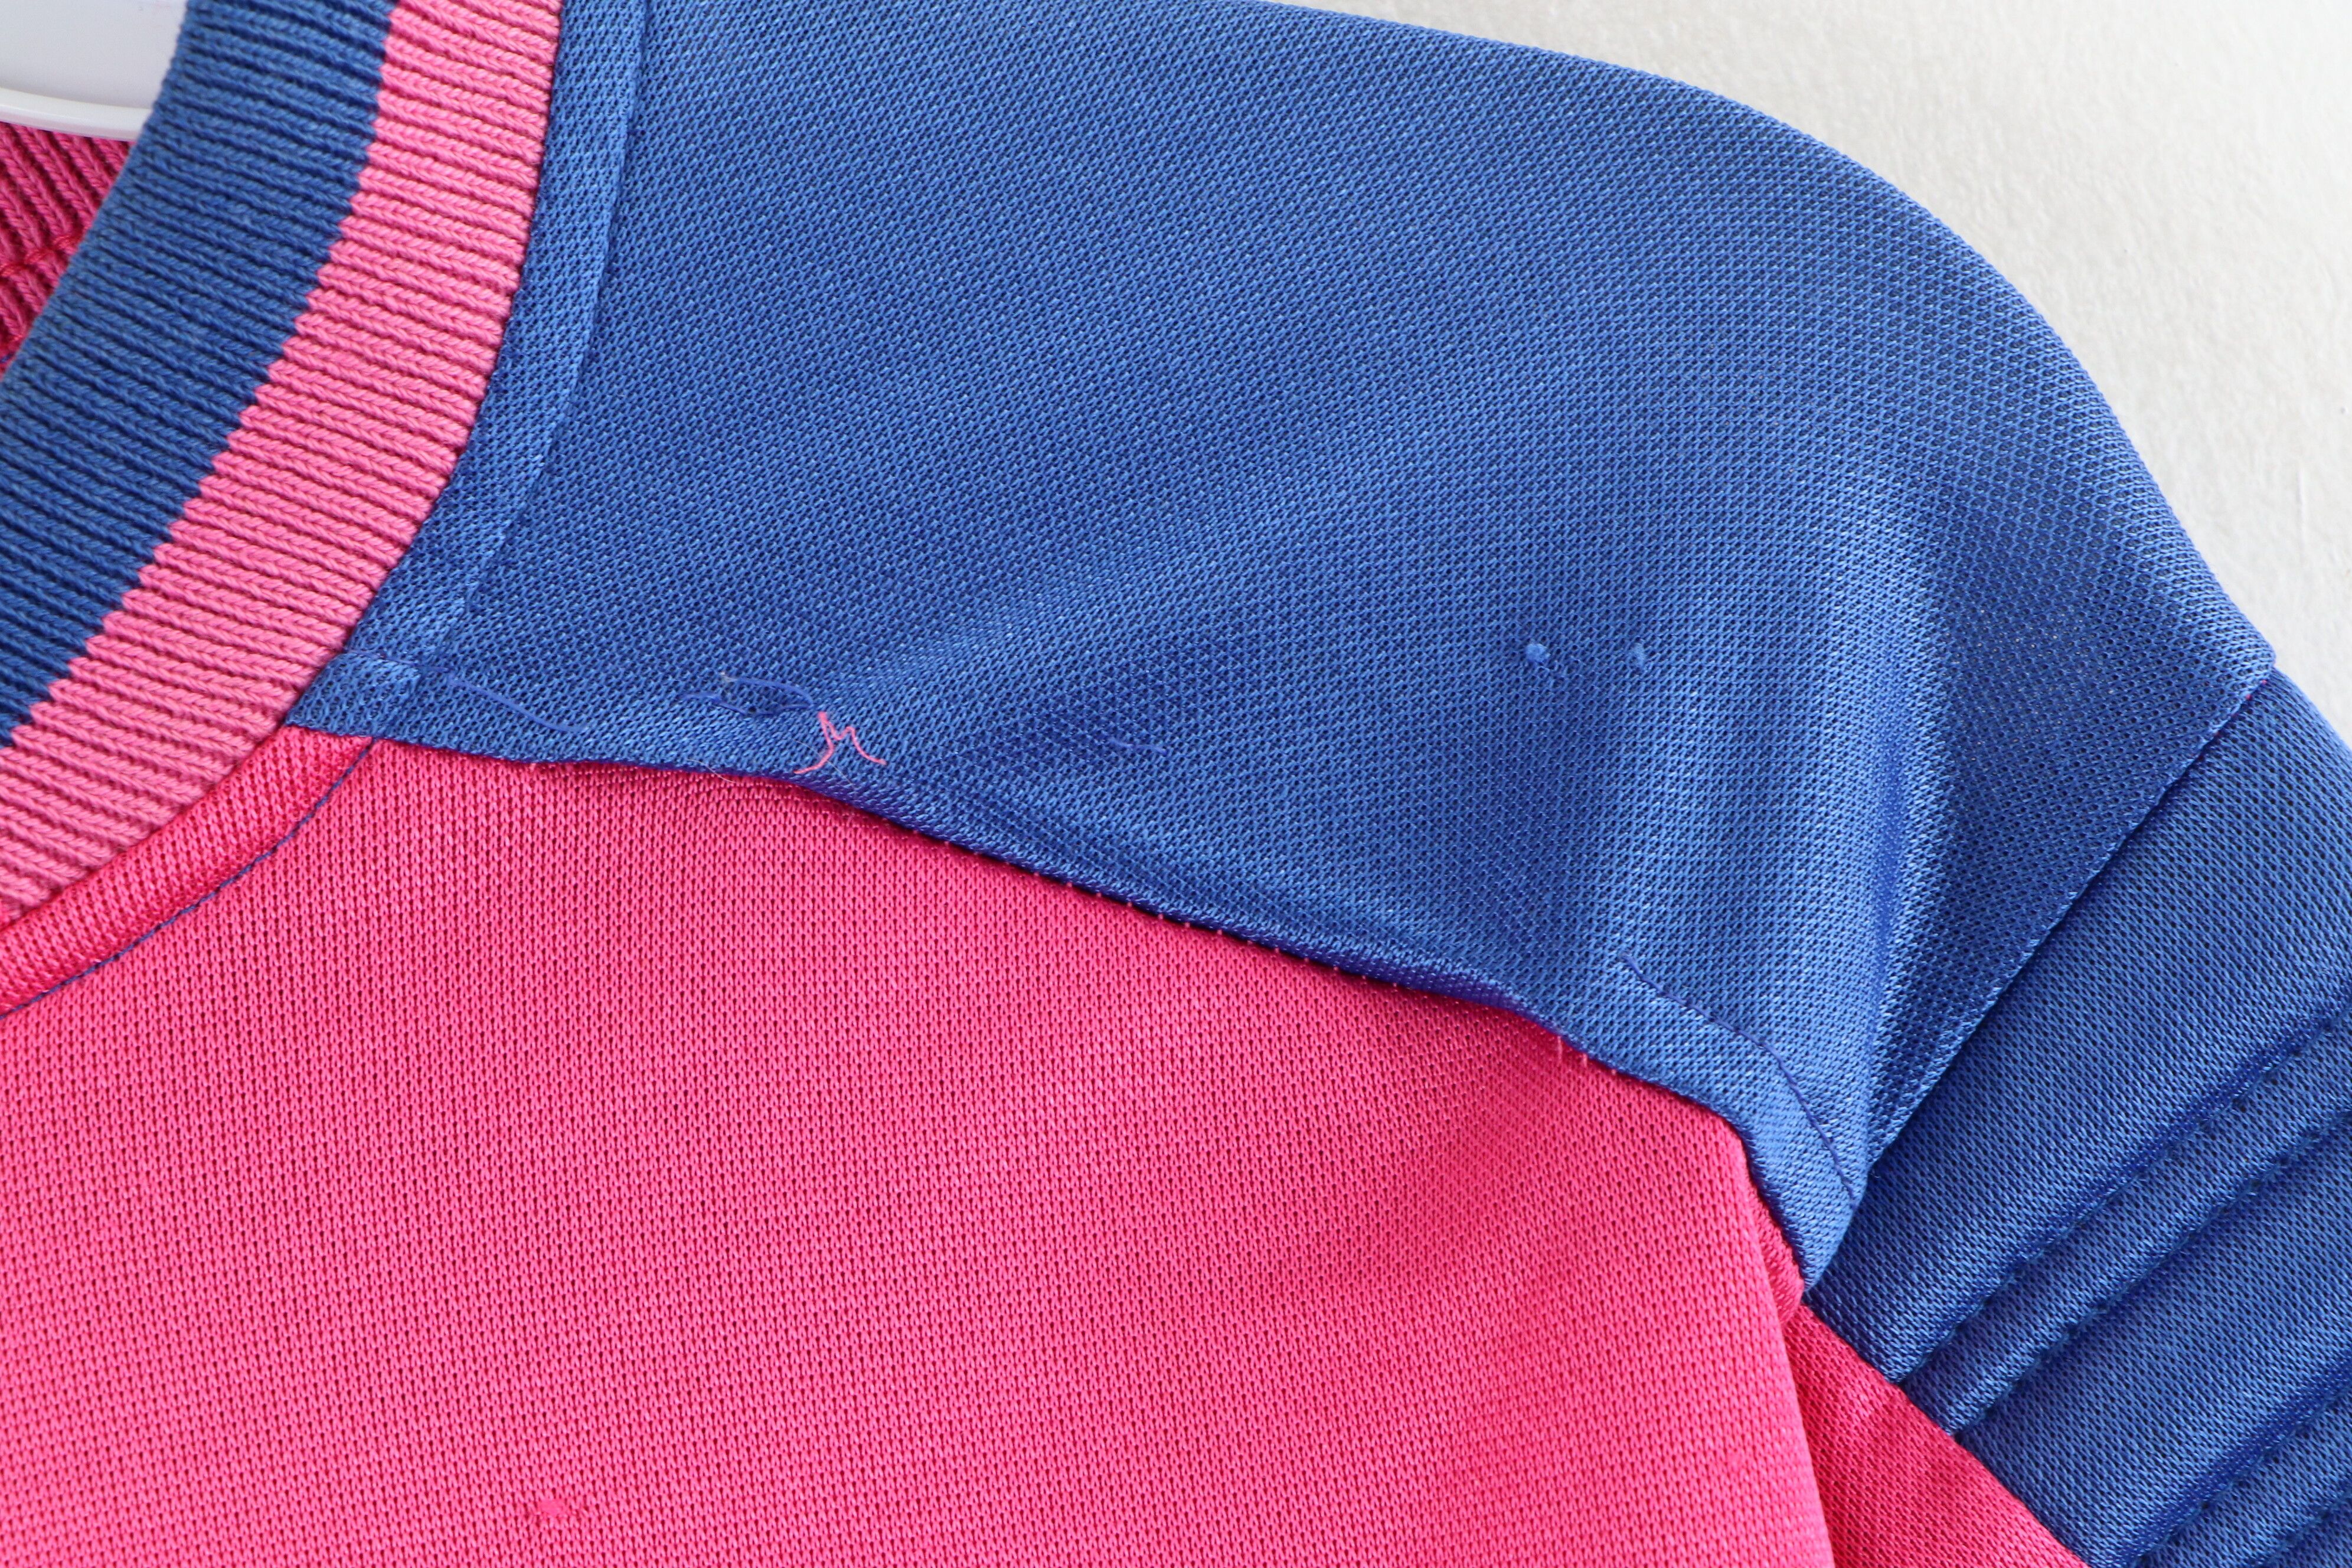 Vintage Vintage 90s Umbro Distressed Padded Goalie Jersey Pink USA Size US S / EU 44-46 / 1 - 6 Thumbnail